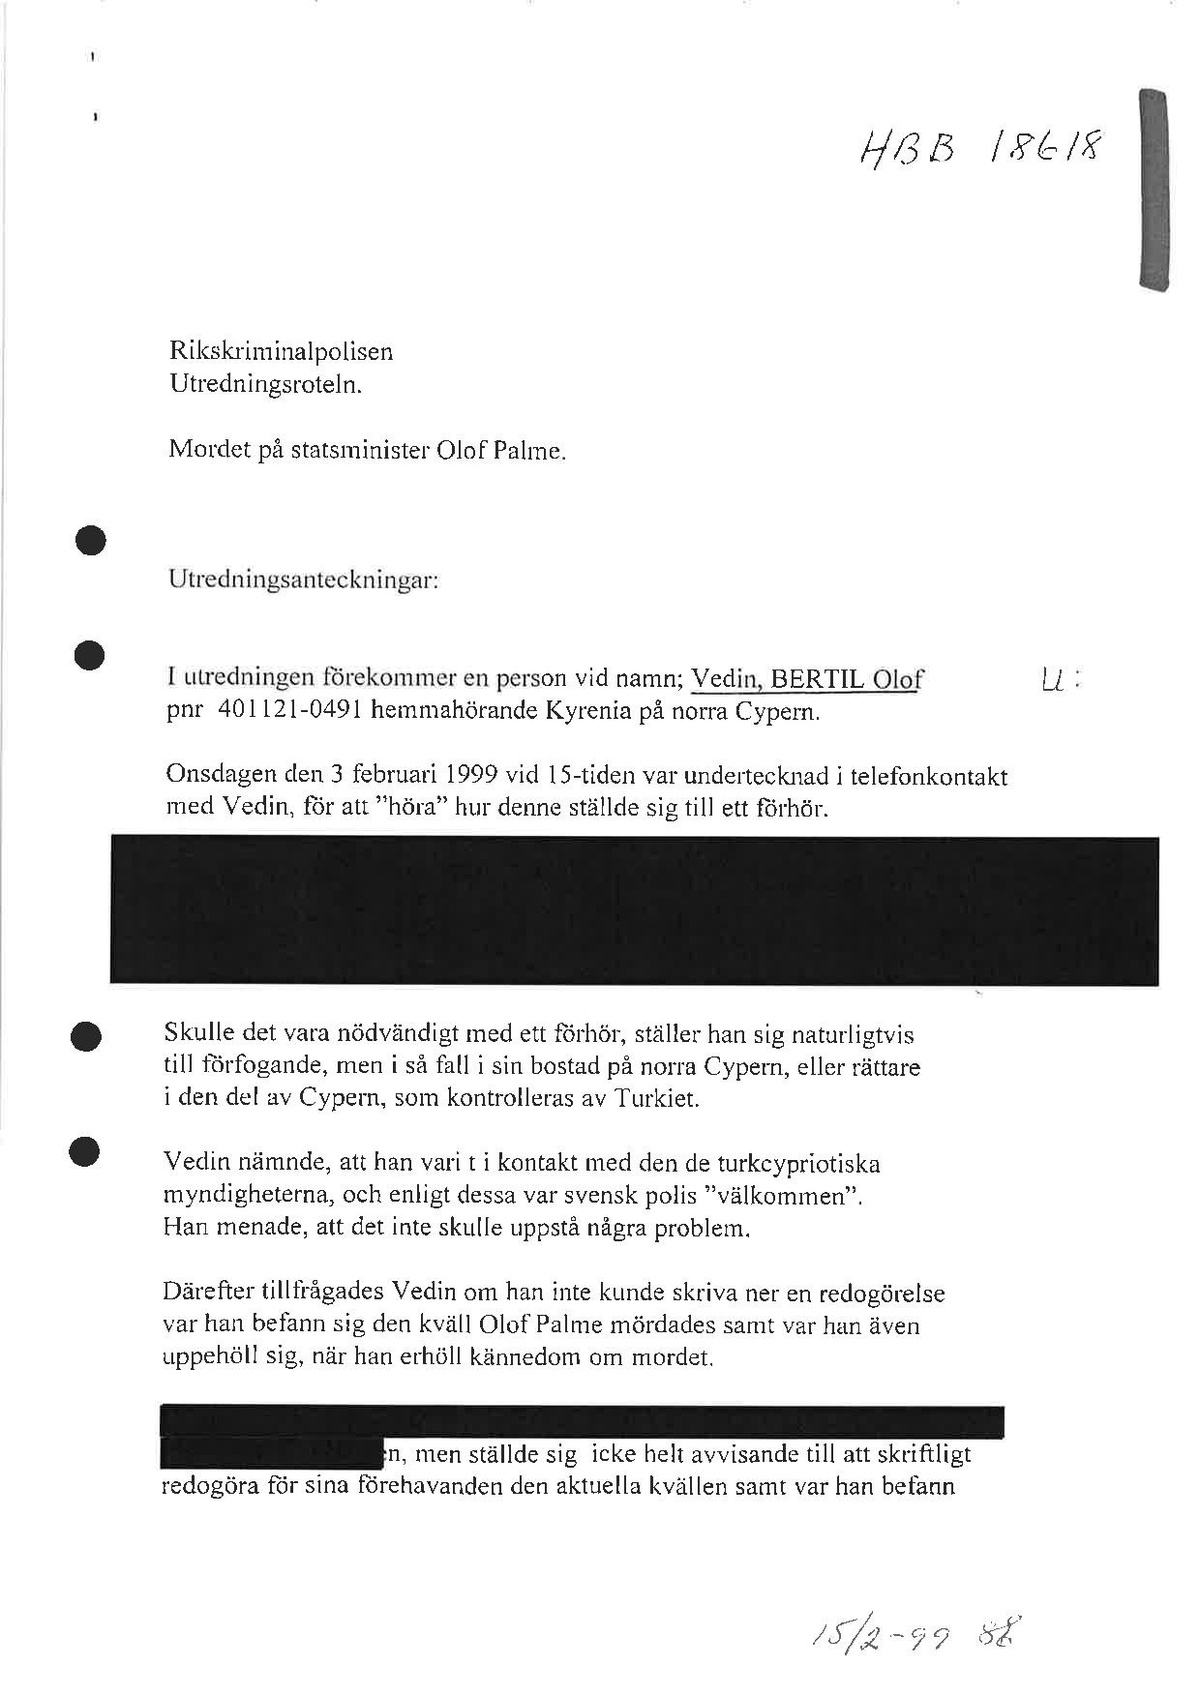 Pol-1999-02-15 HBB18618-00 alla-förhör-Bertil-Wedin.pdf